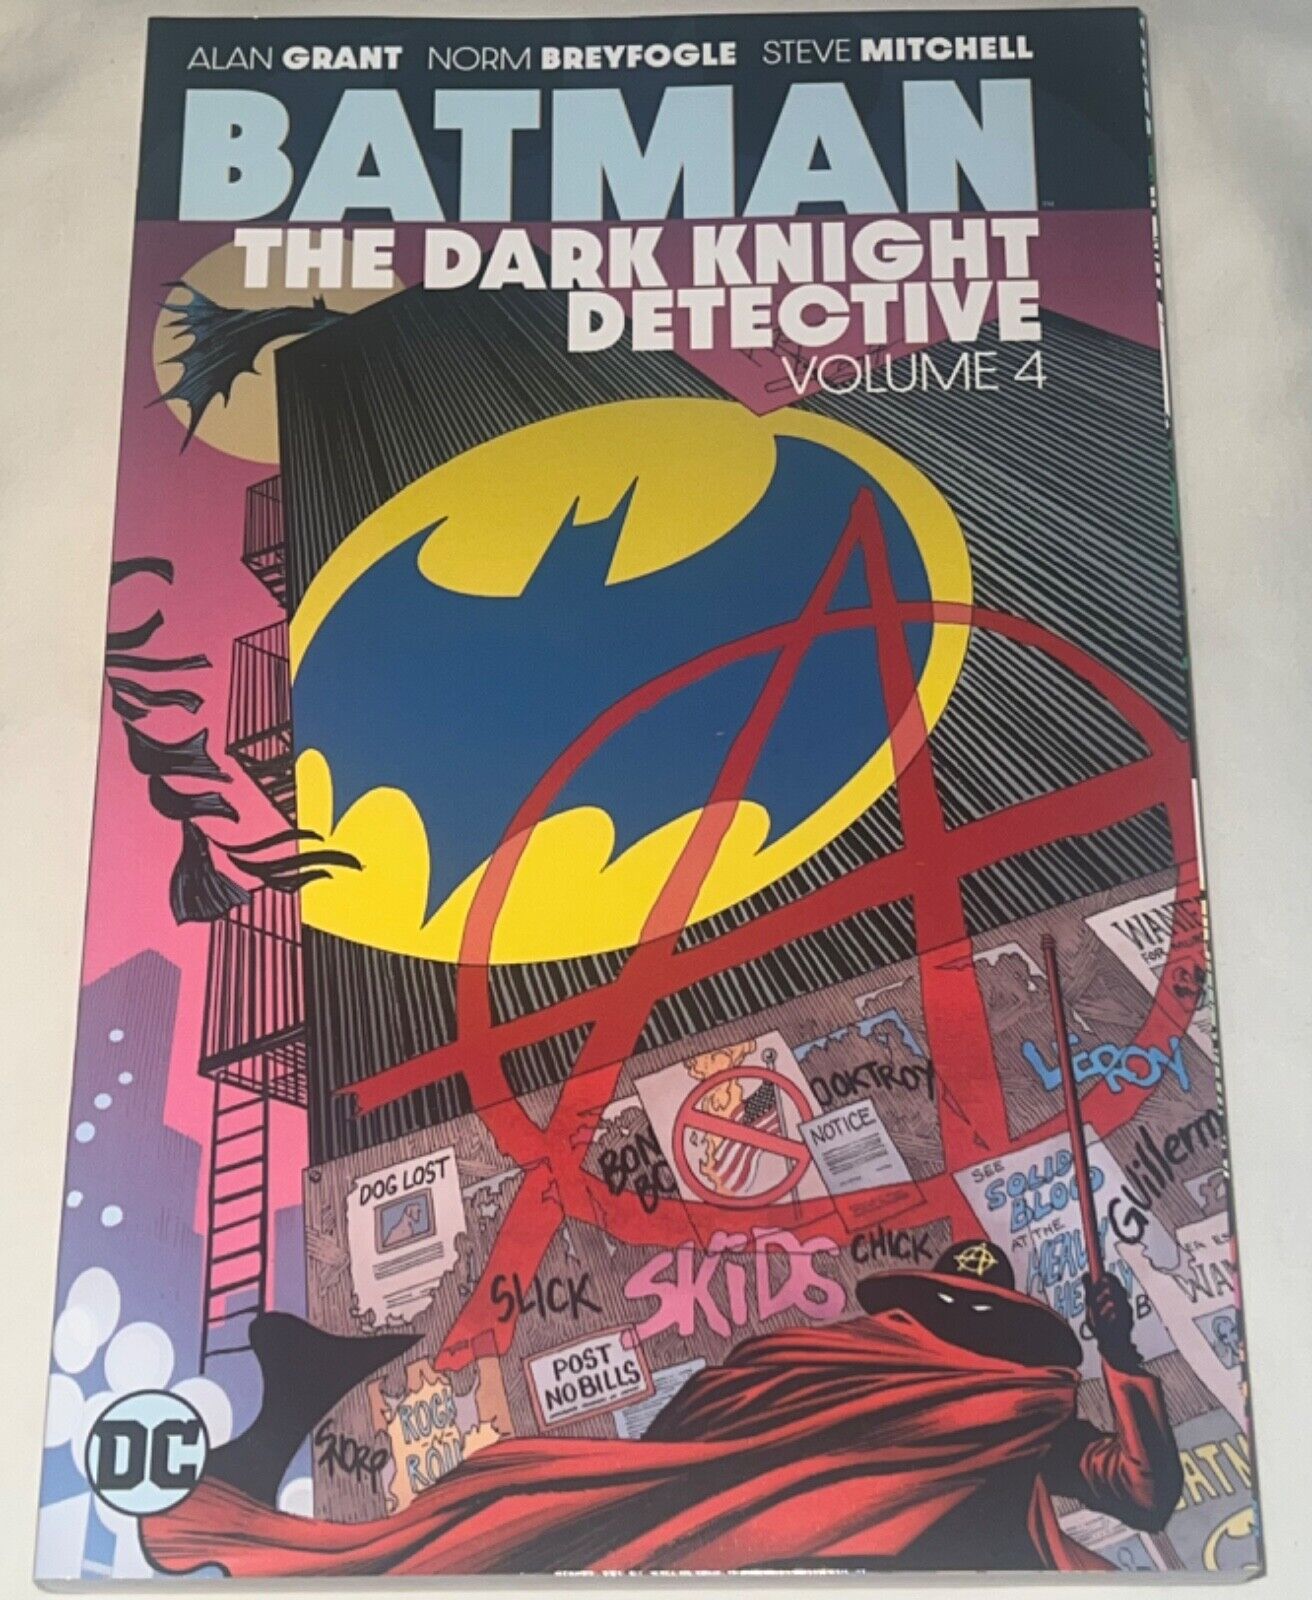 BATMAN THE DARK KNIGHT DETECTIVE VOL 4 TPB Trade Paperback Alan Grant Brand New